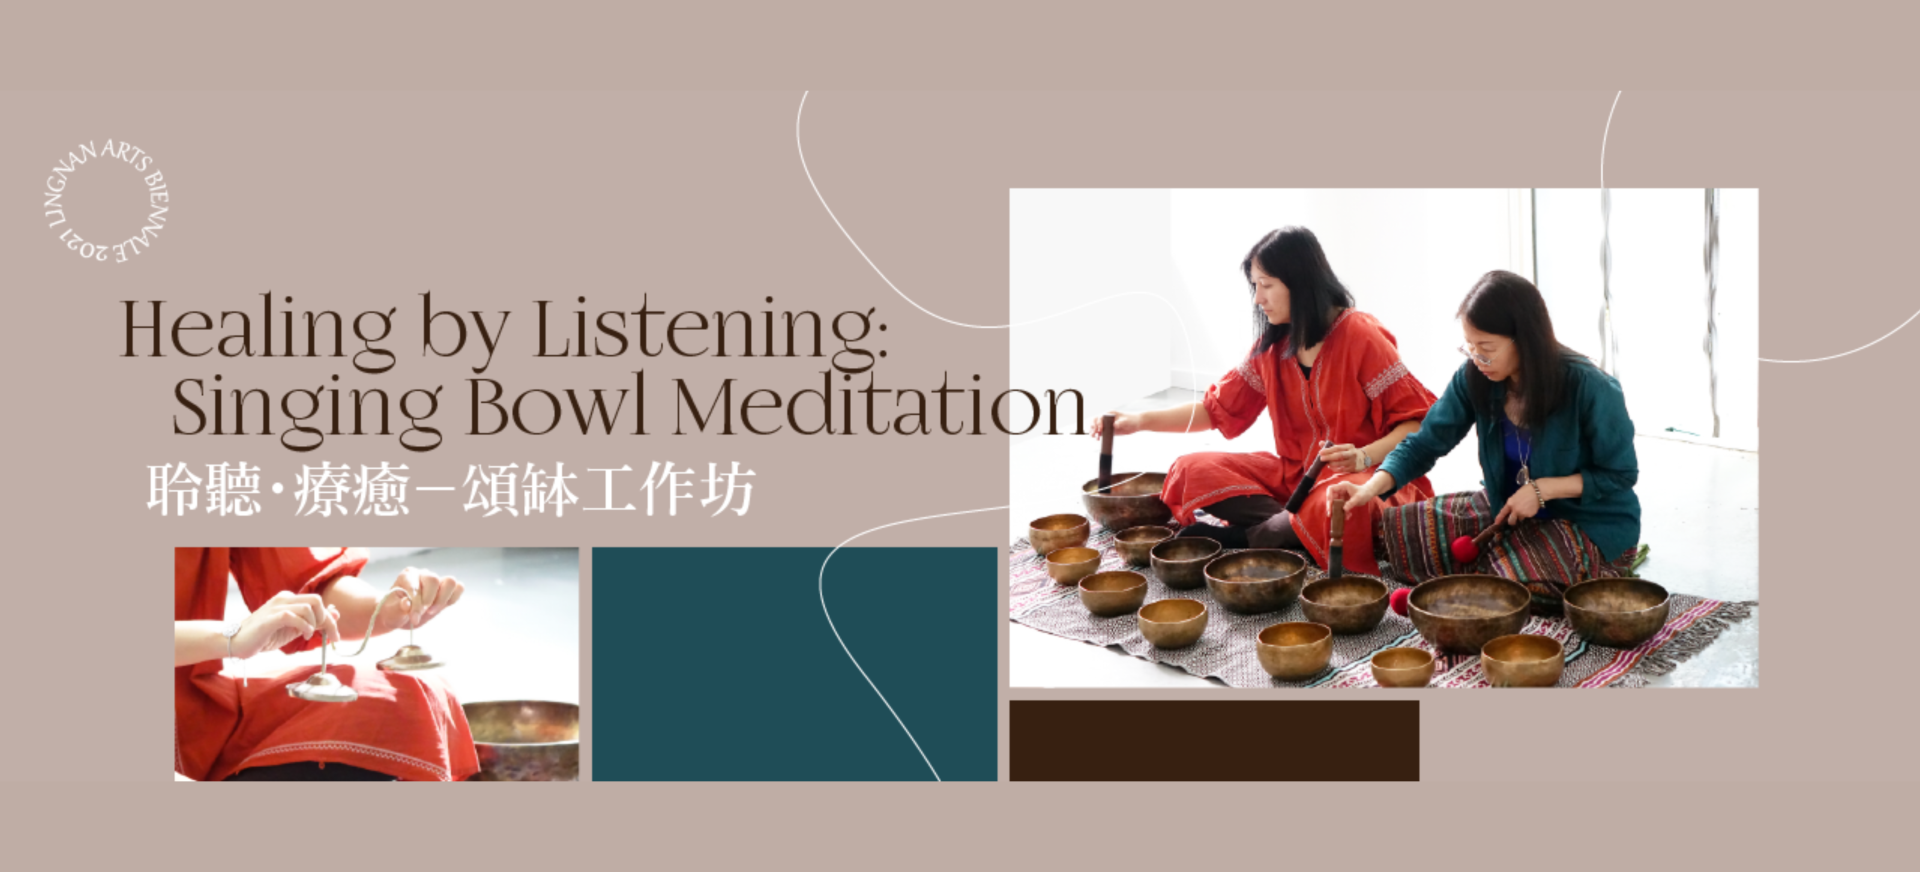 Healing by Listening: Singing Bowl Meditation